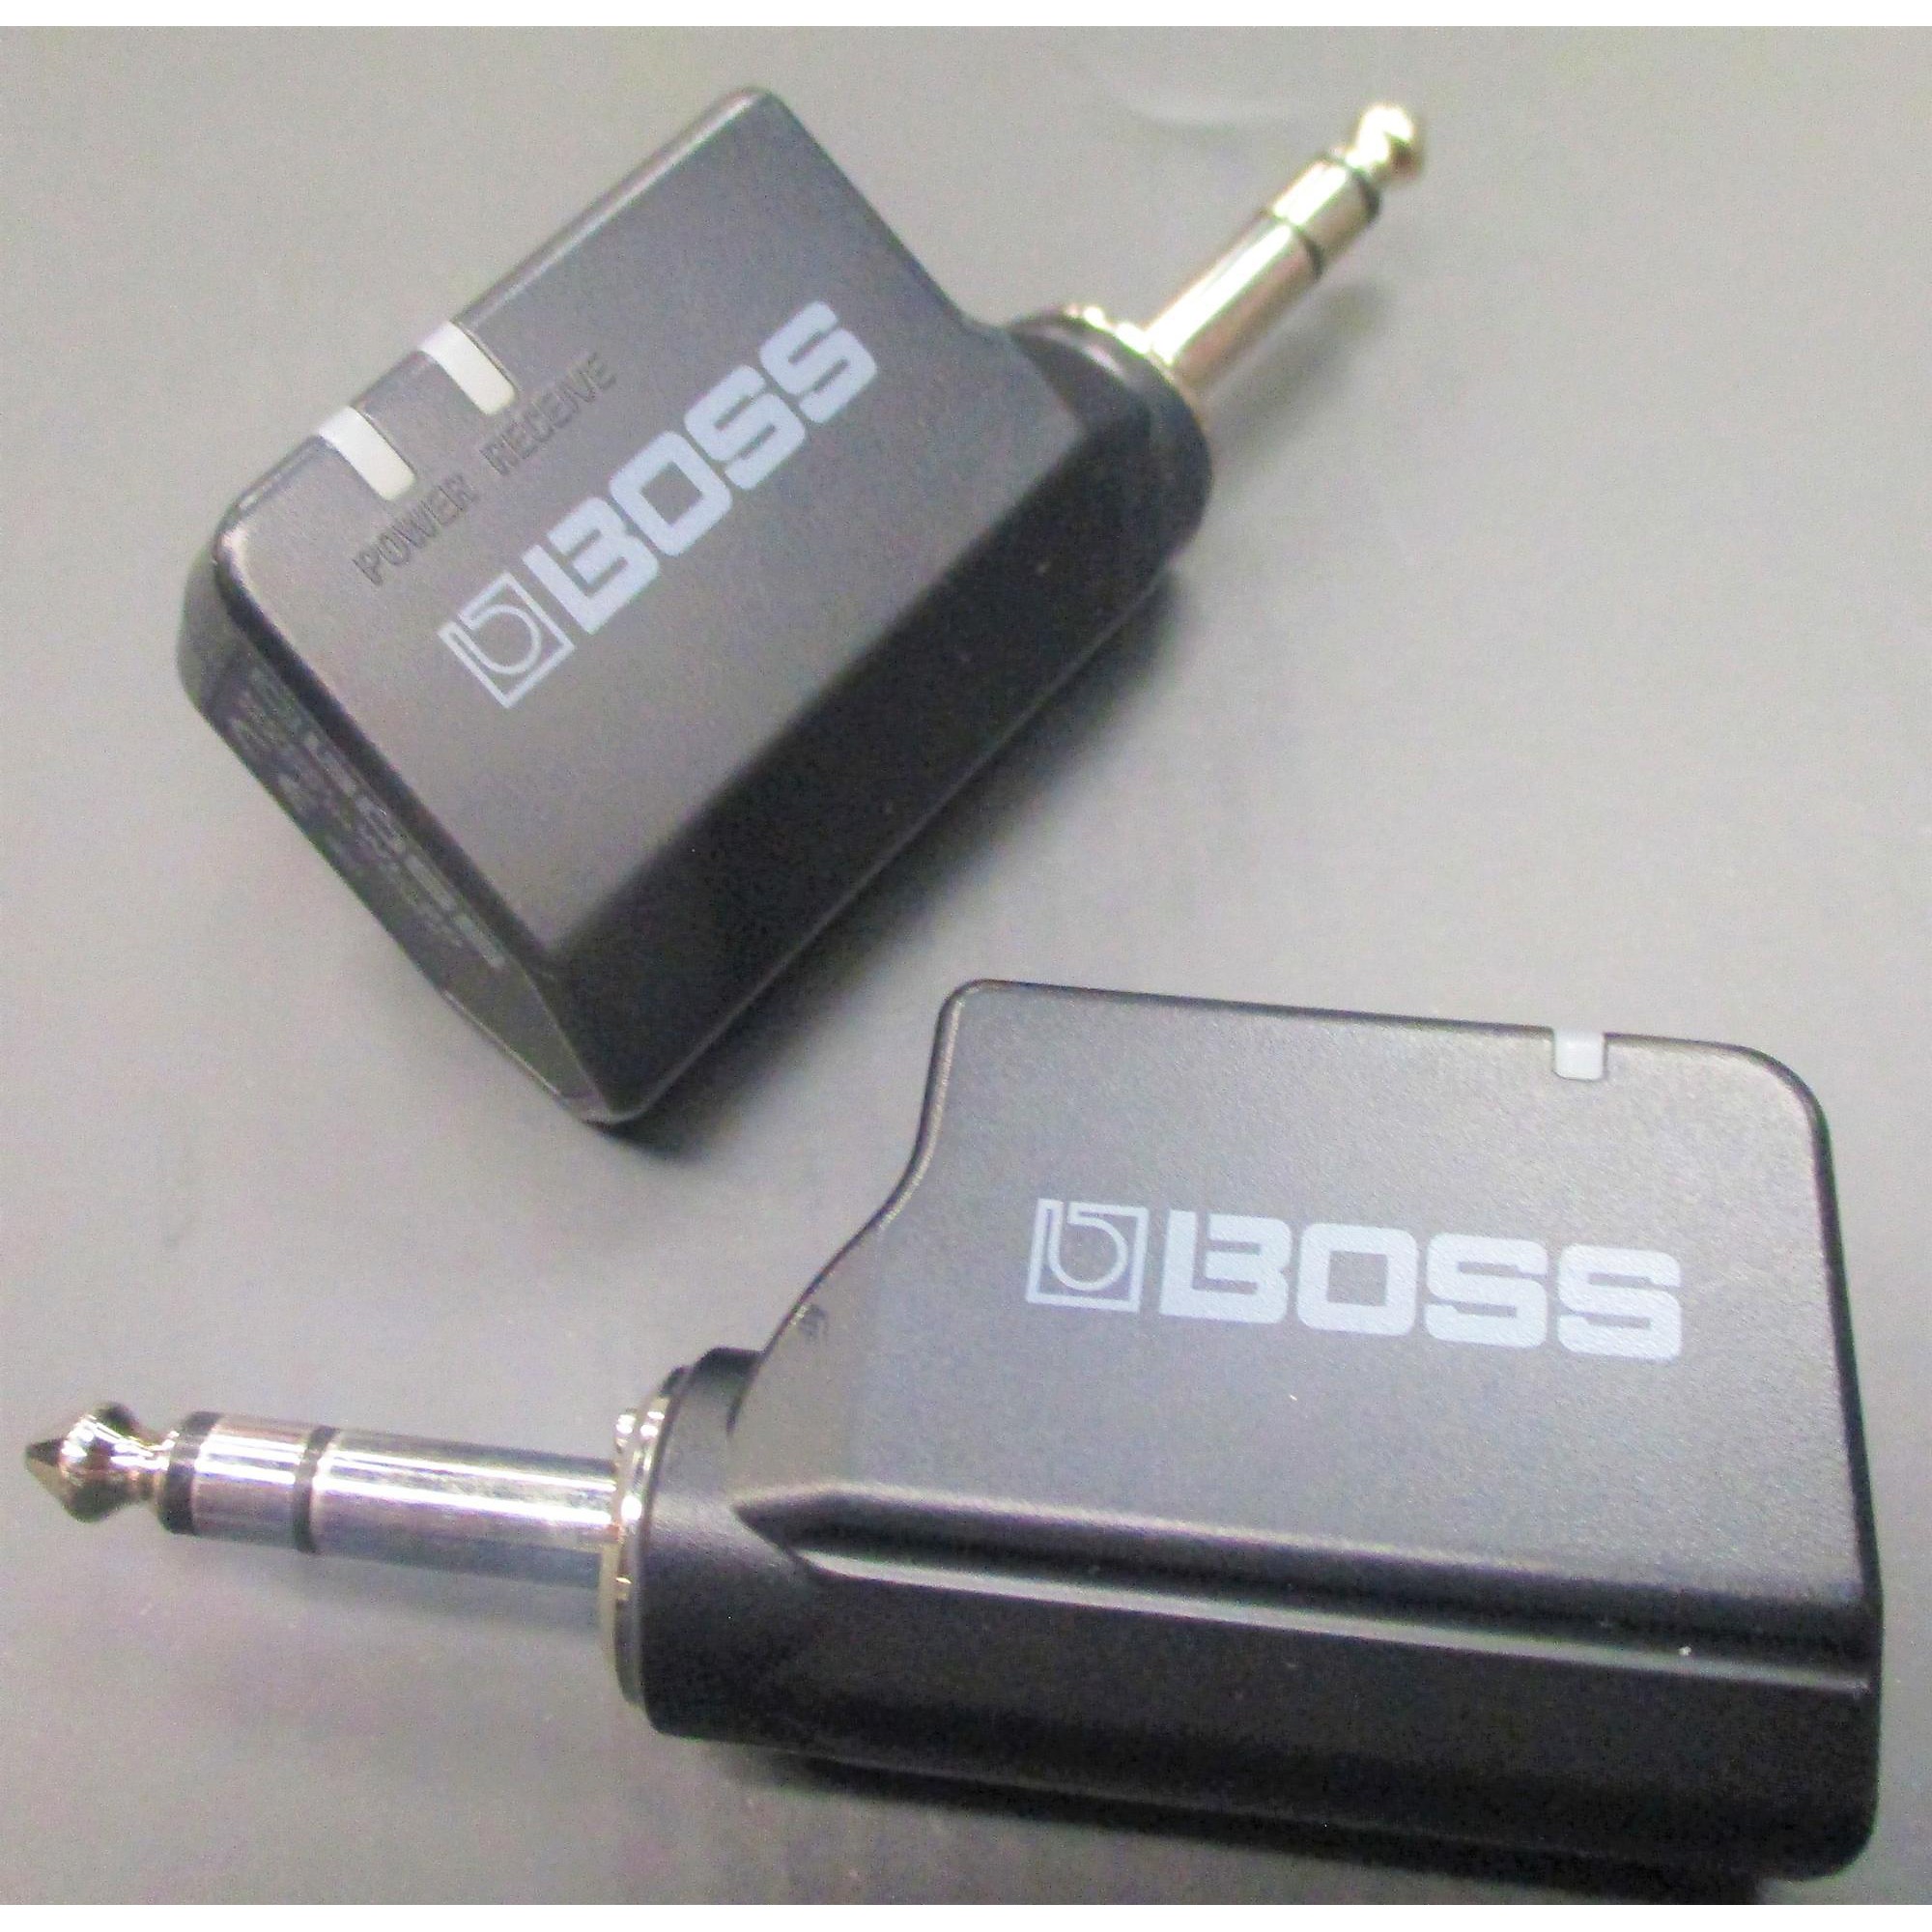 Used BOSS WL-20 Instrument Wireless System